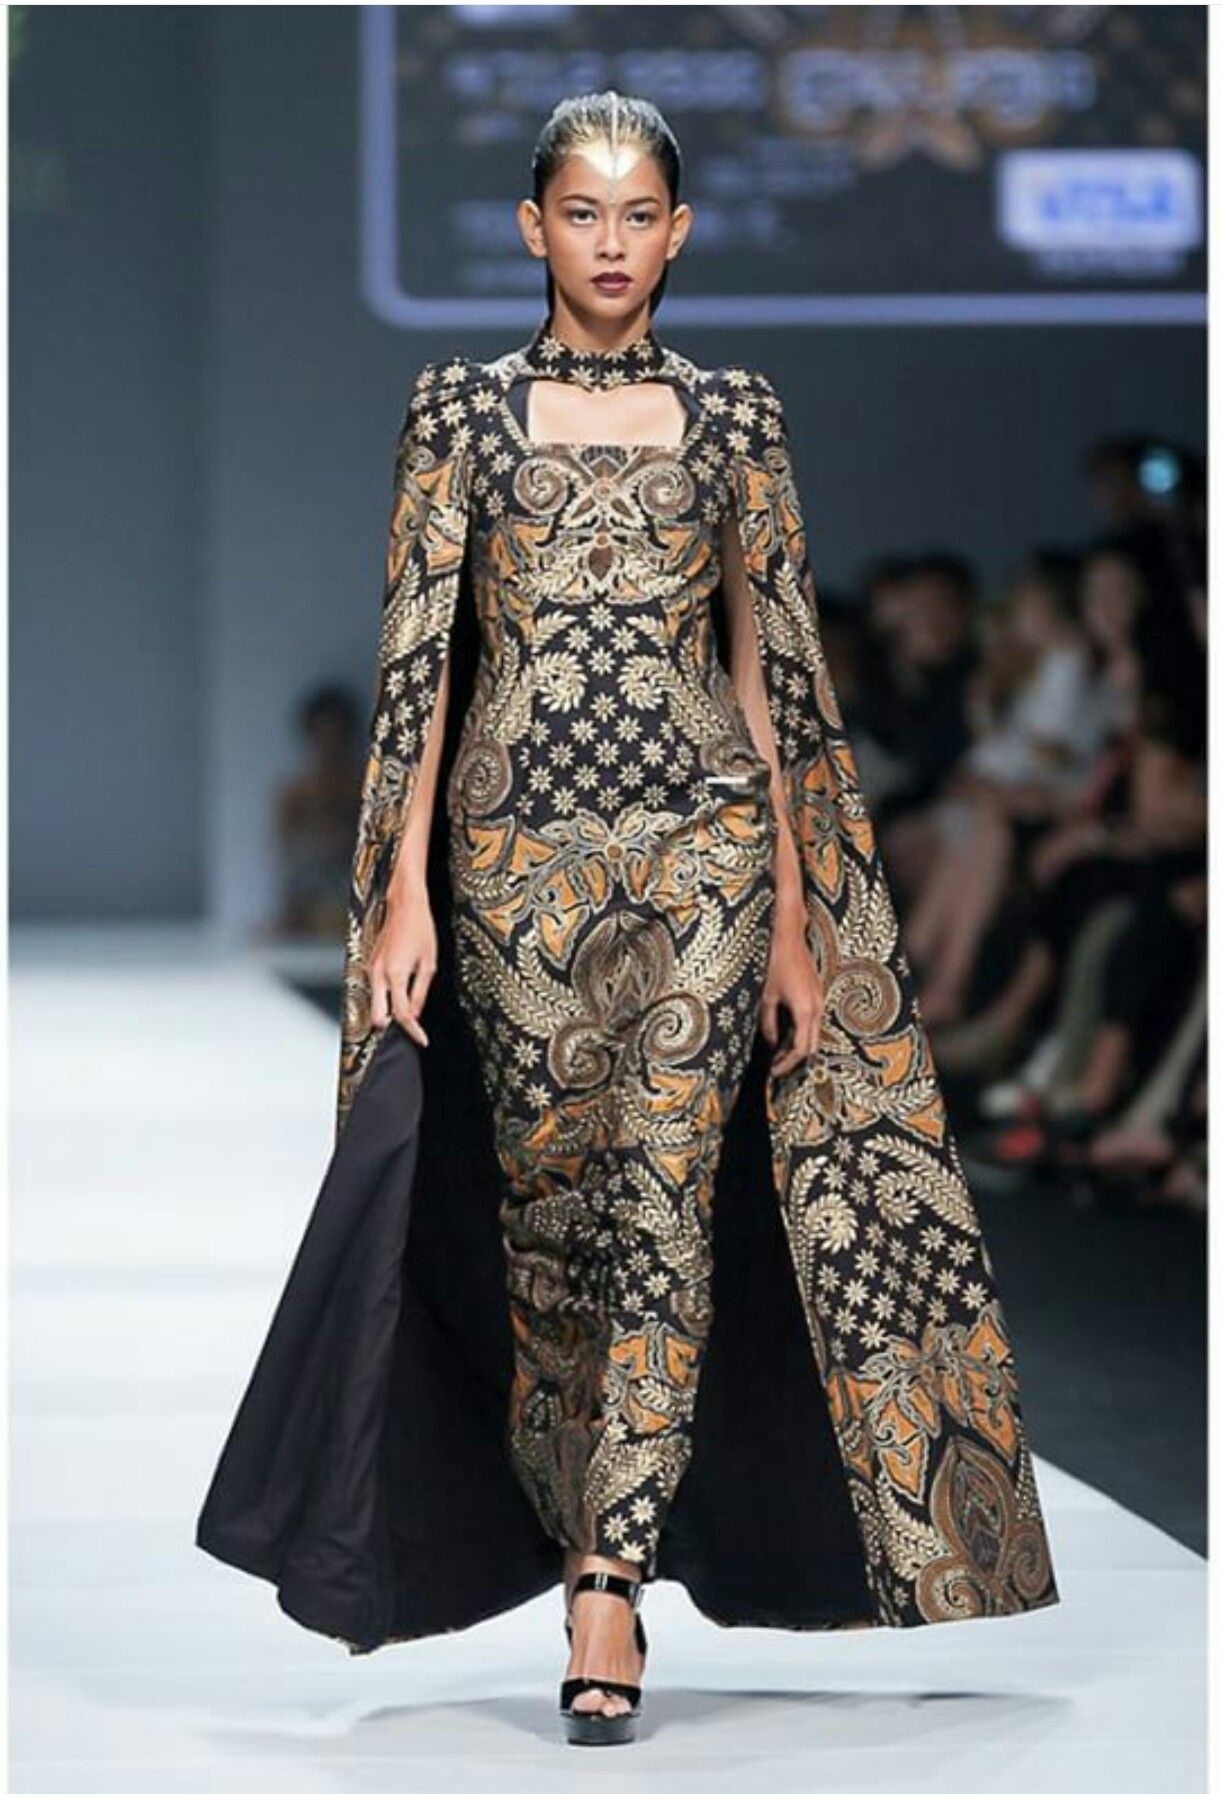 Gaun batik fashion show